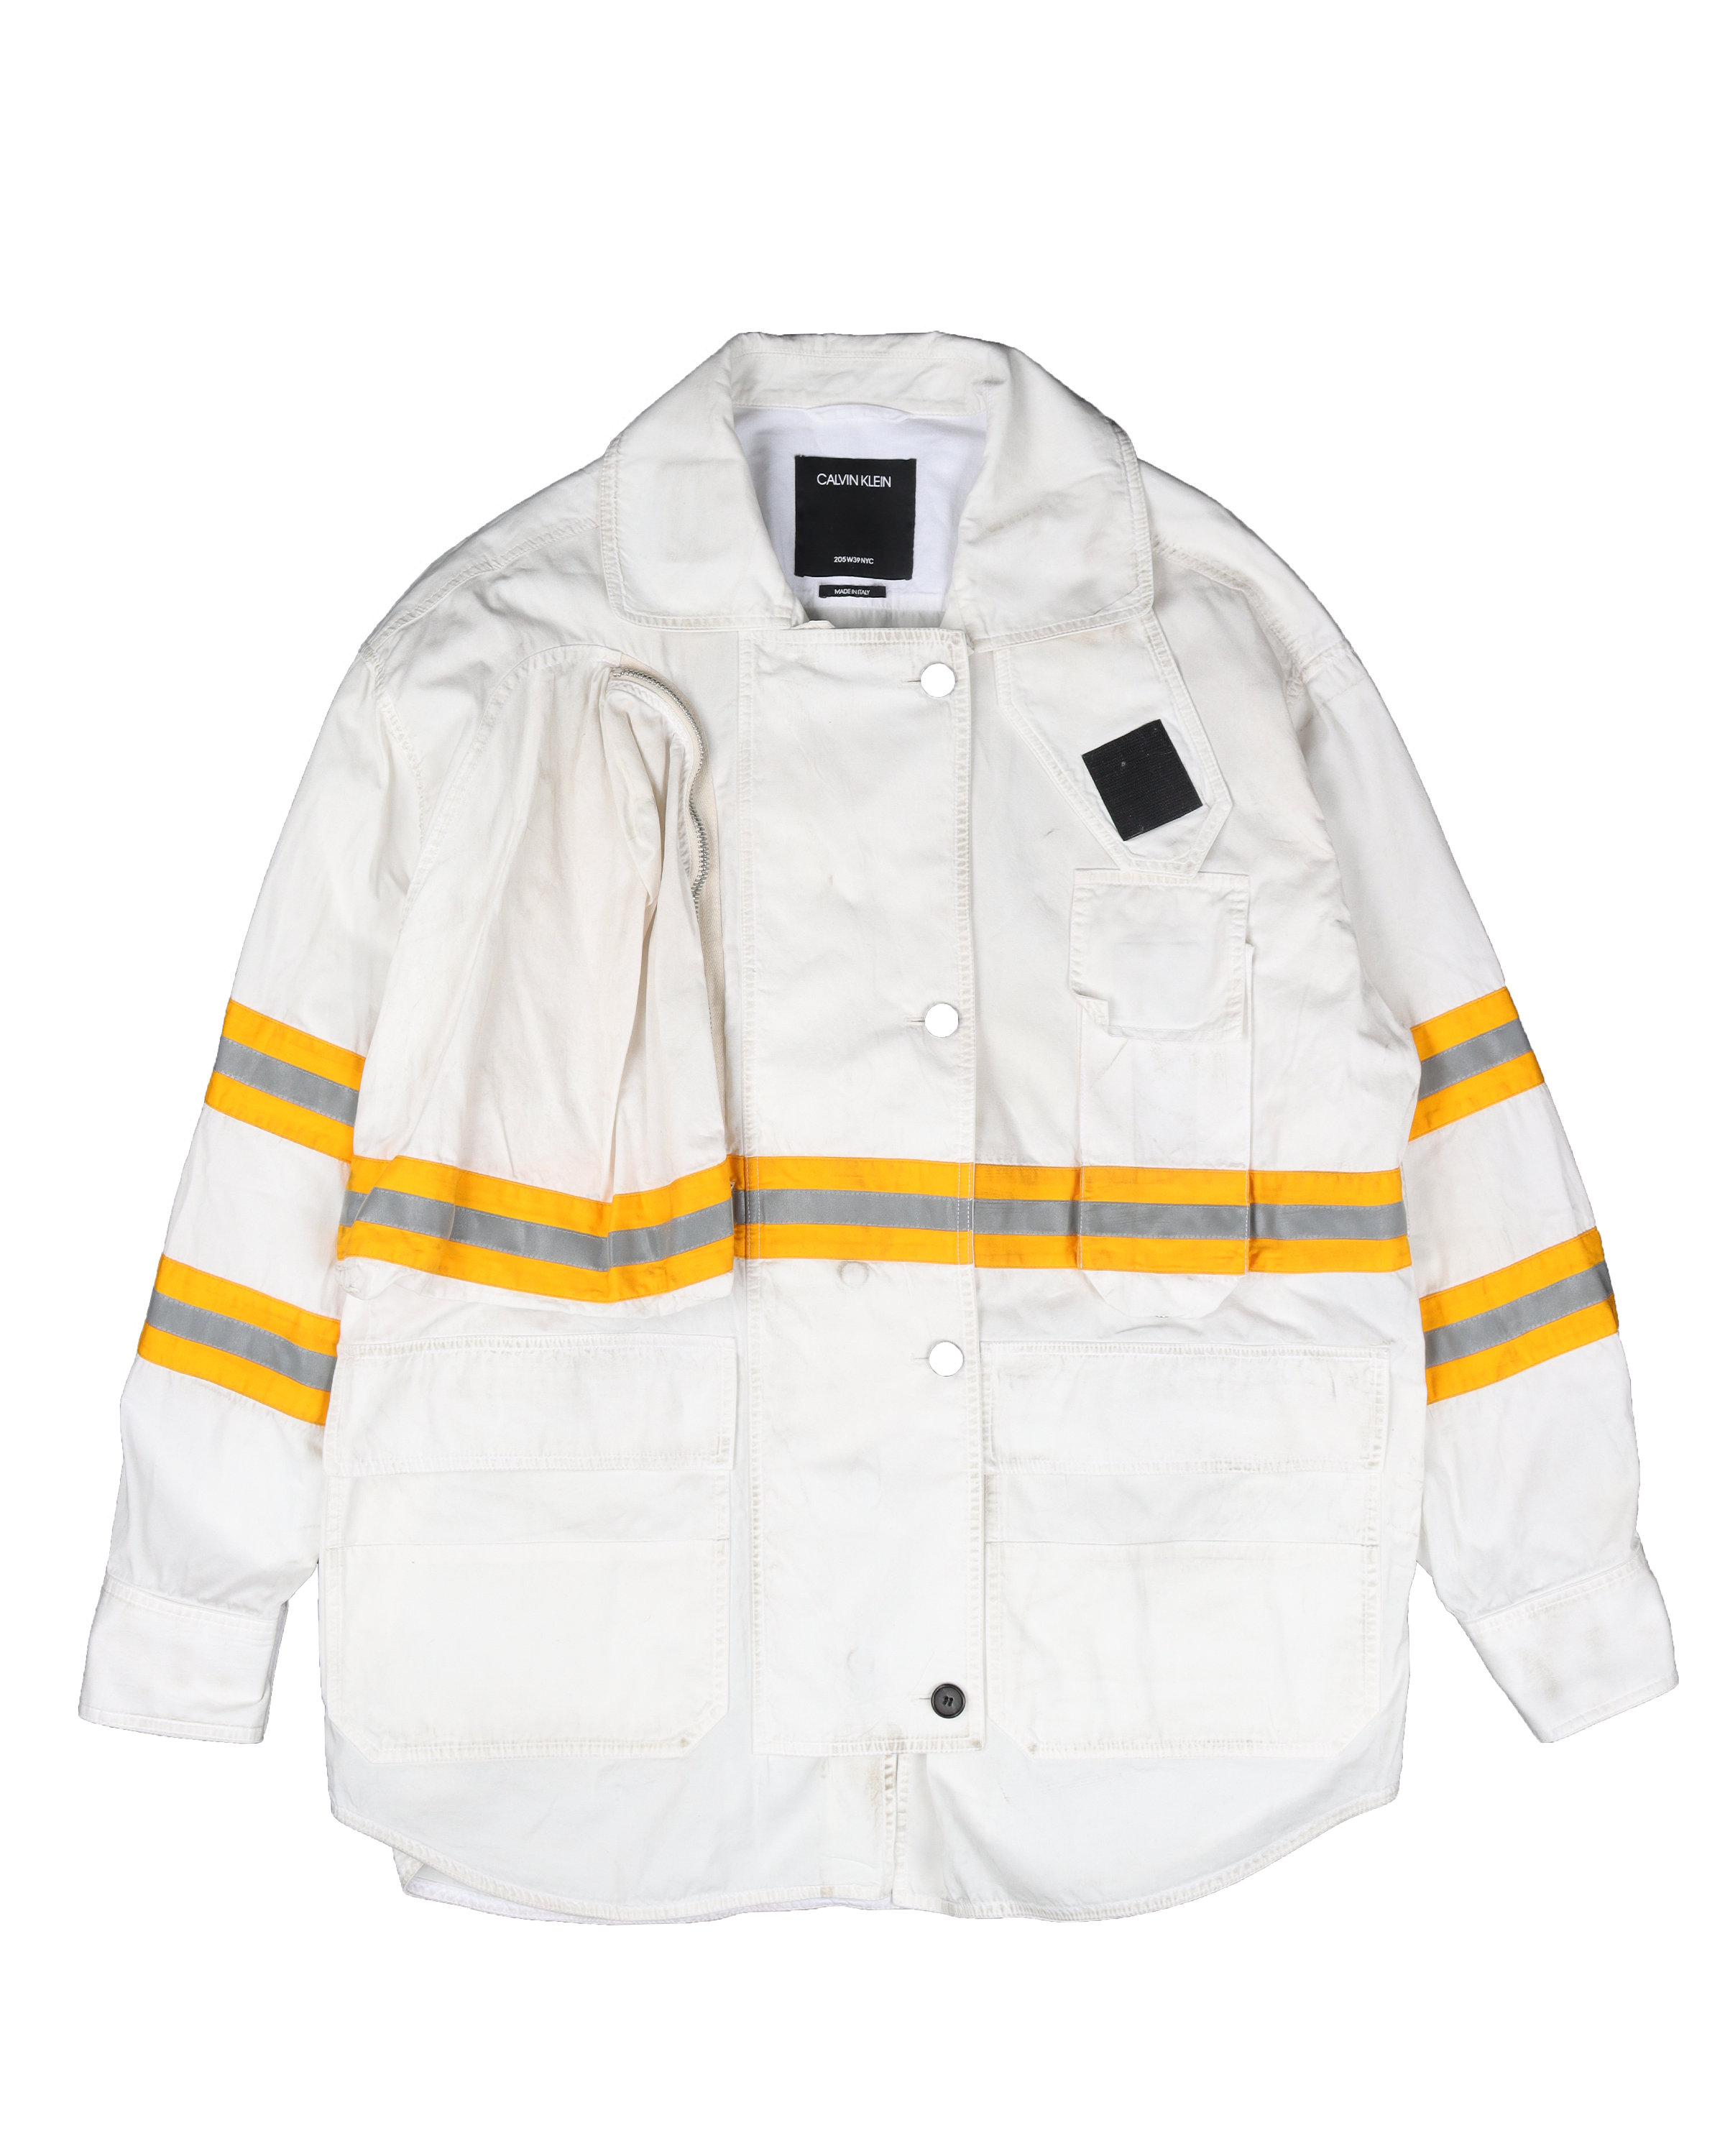 Firefighter Jacket